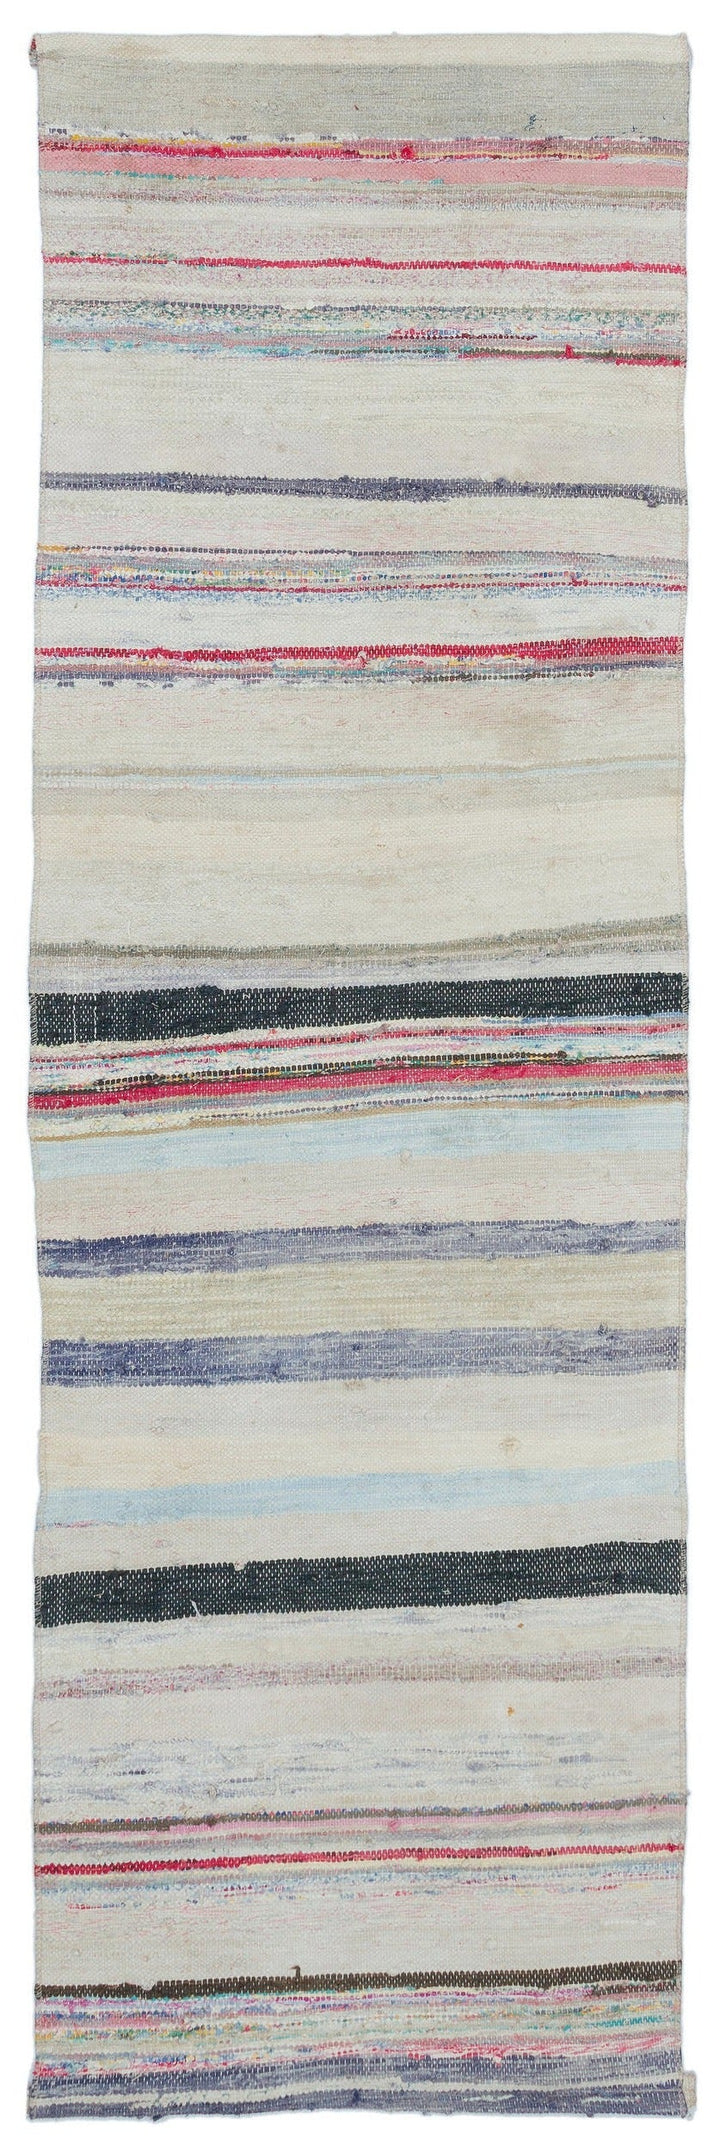 Cretan Beige Striped Wool Hand-Woven Carpet 069 x 225